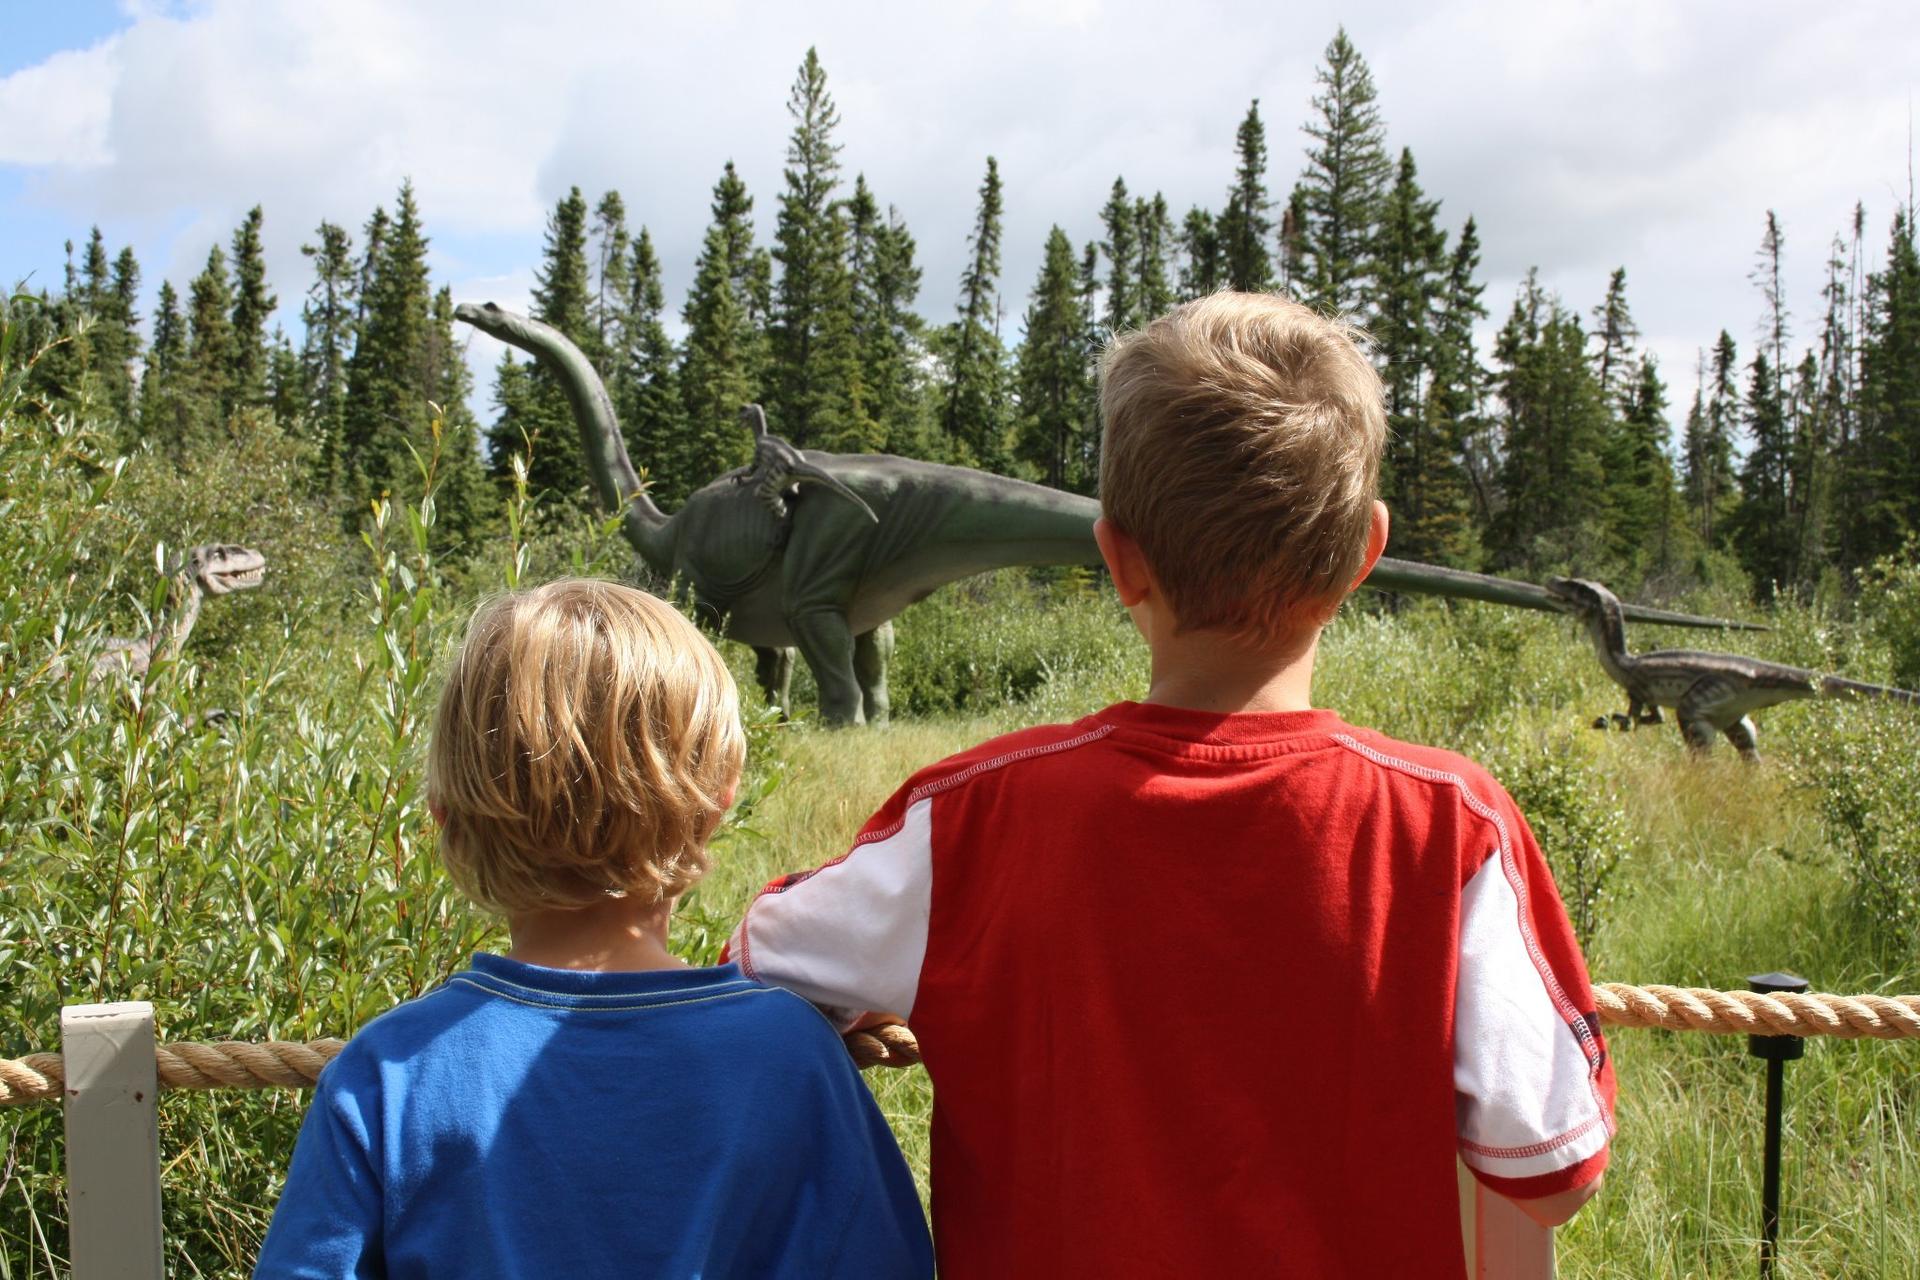 The Jurassic Forest Prehistoric Dinosaur Park near Edmonton.